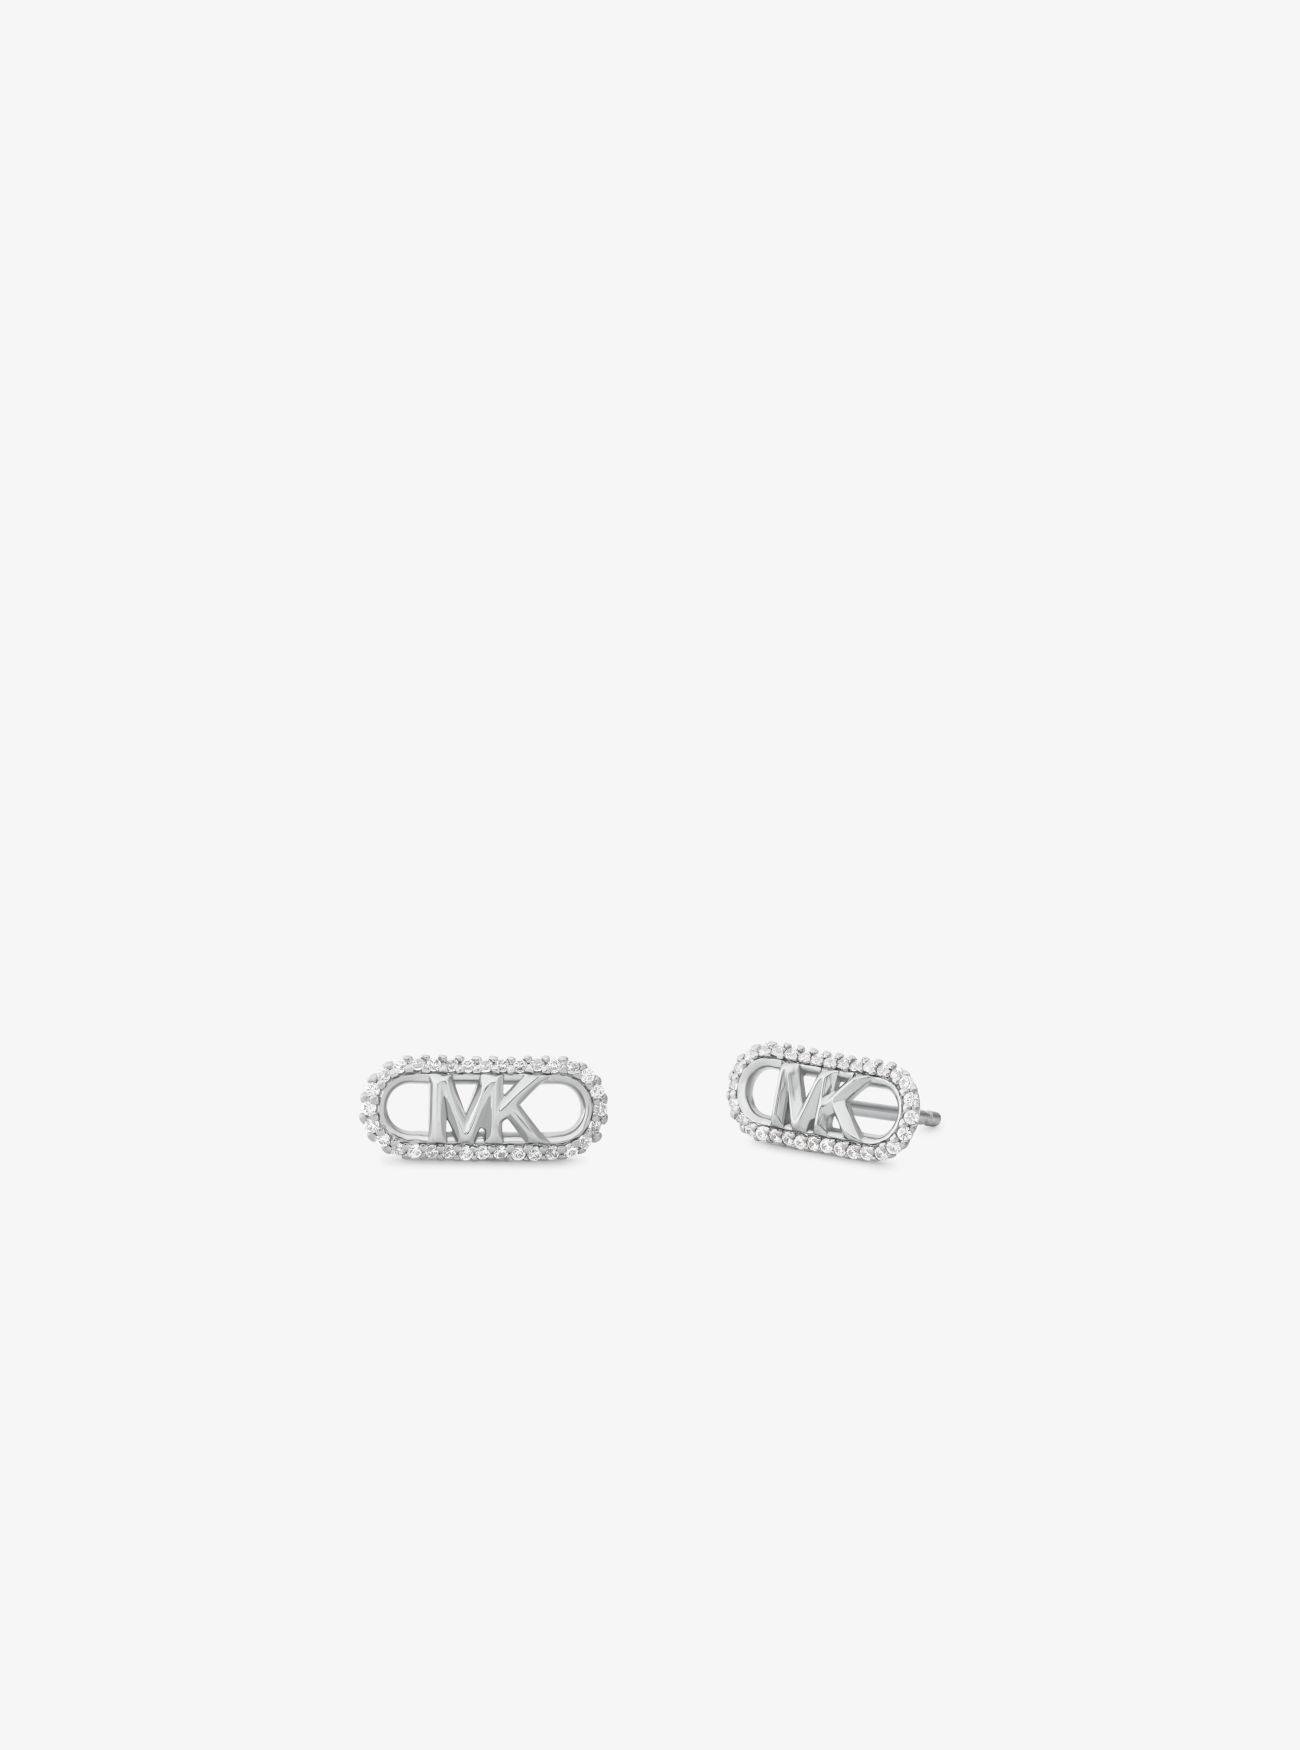 MK Precious Metal-Plated Sterling Silver PavÃ© Empire Logo Earrings - Silver - Michael Kors